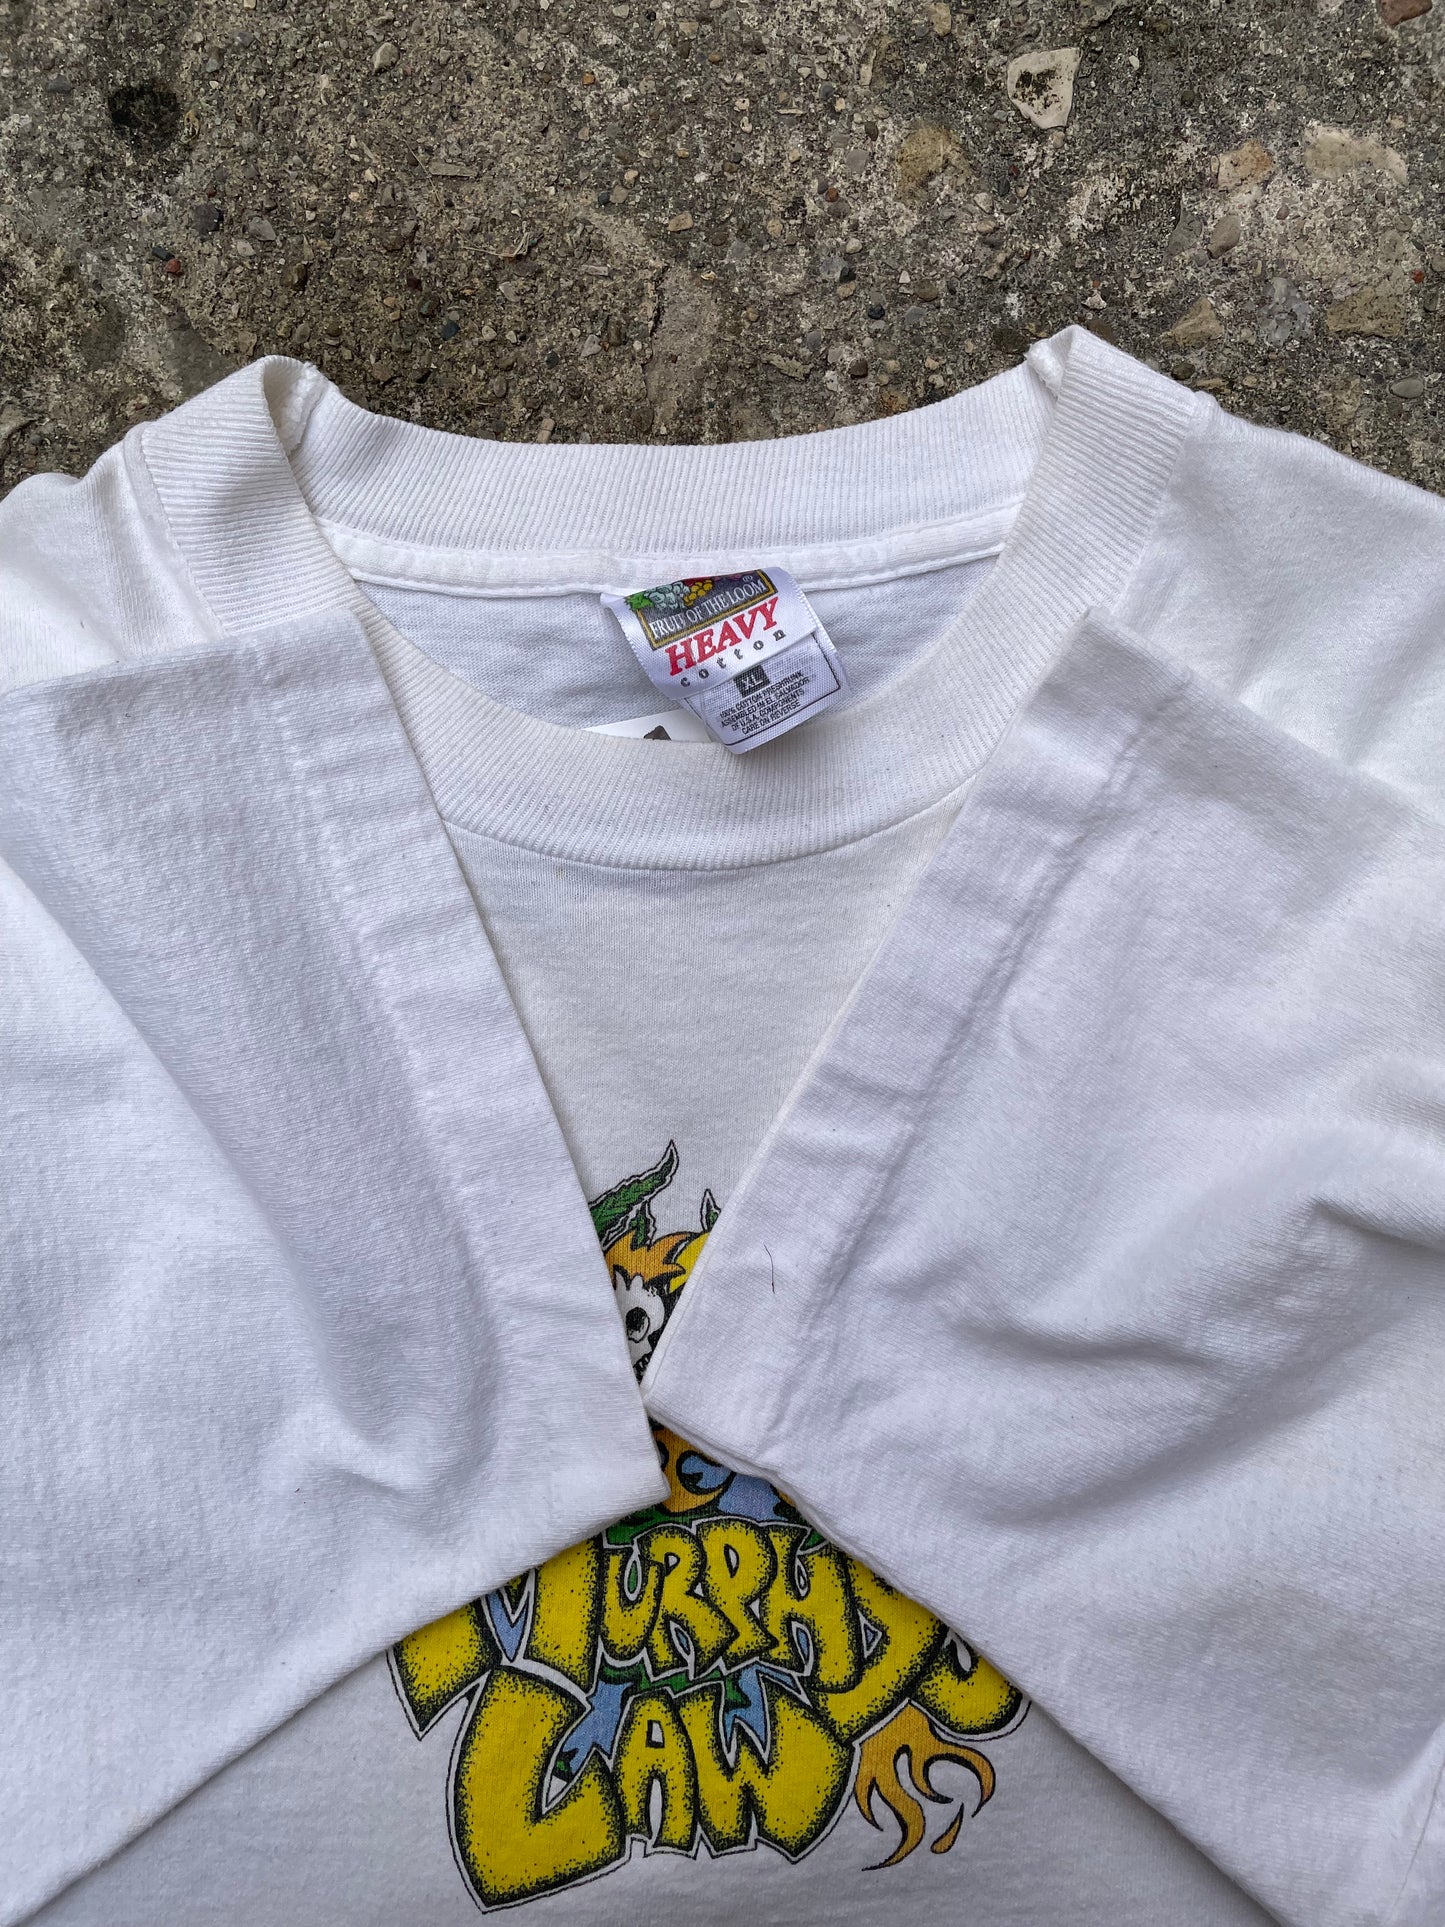 1997 Murphy's Law NYHC Band T-Shirt - XL